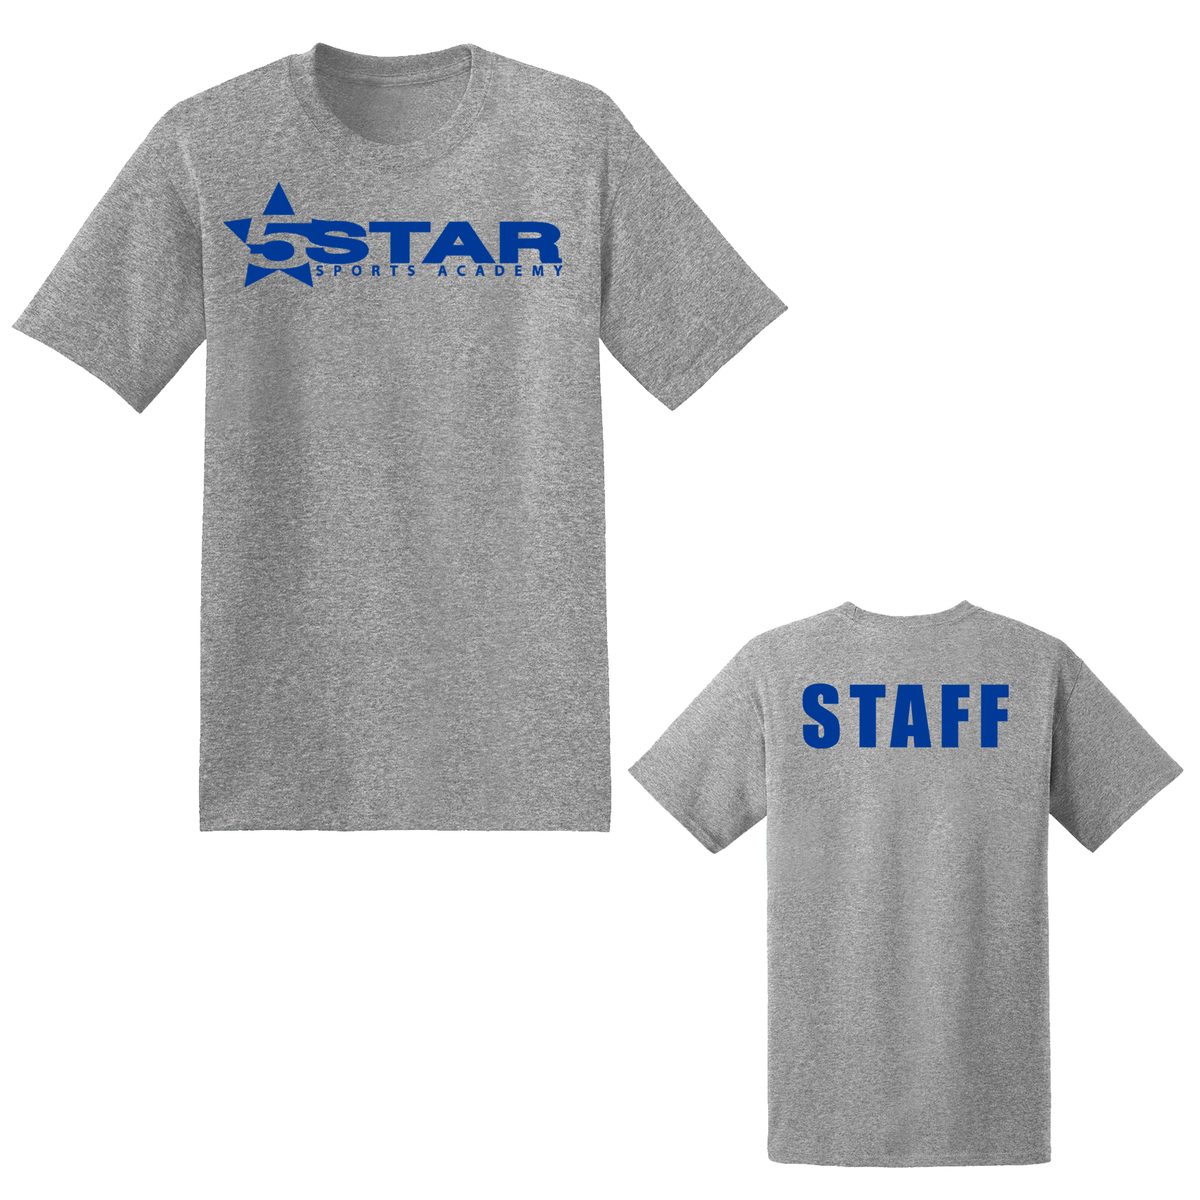 5 Star Gymnastics Staff T-Shirt